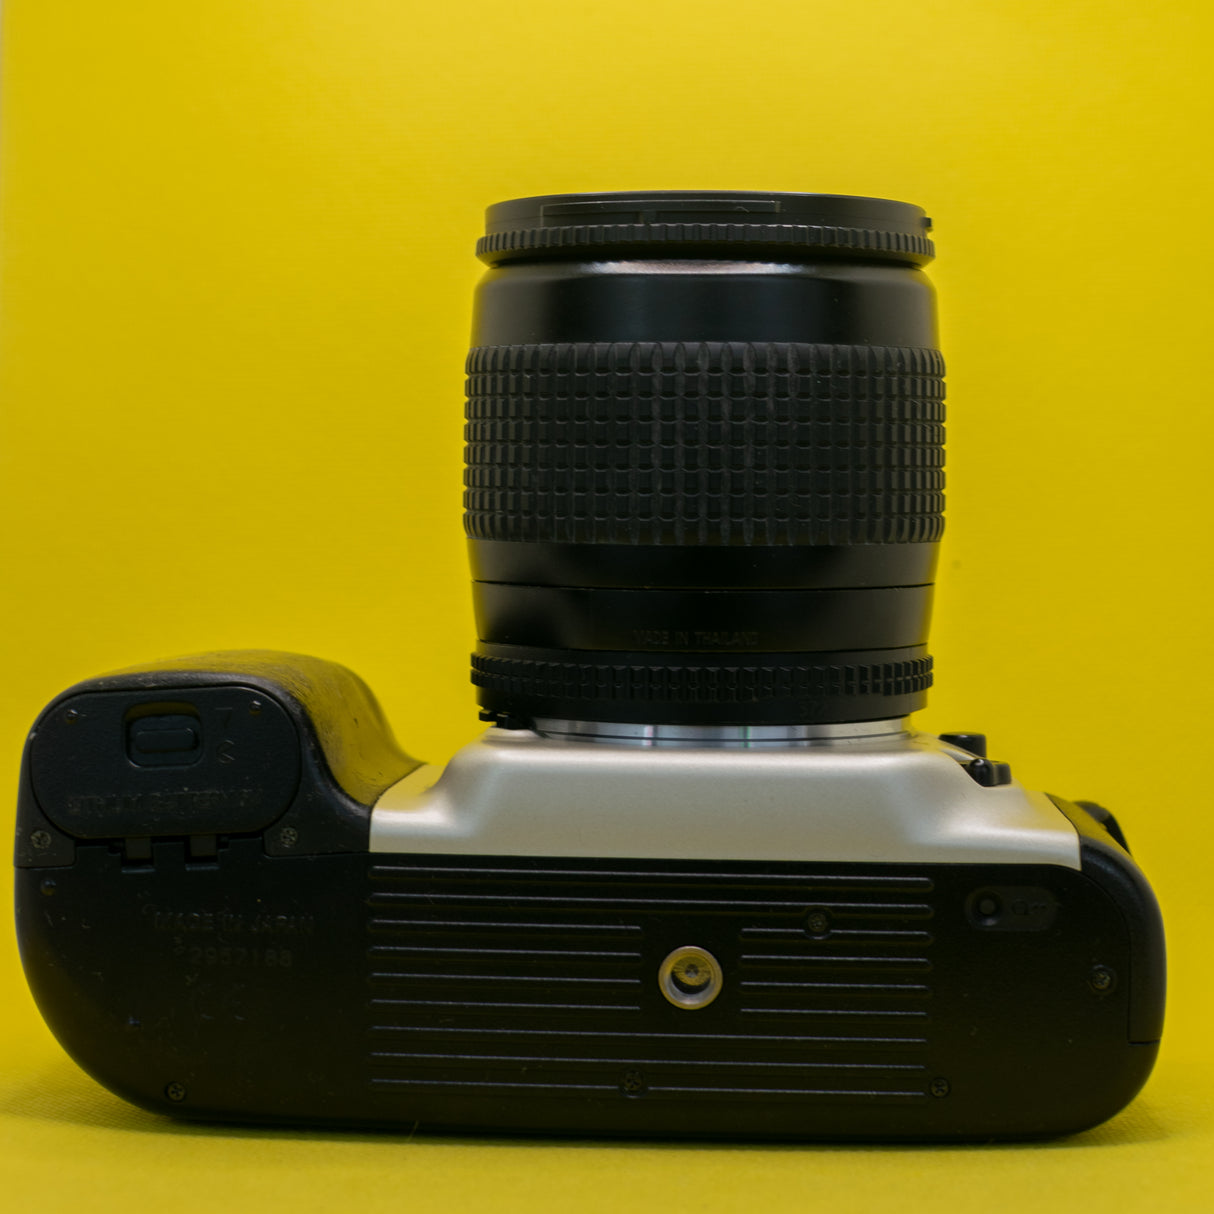 Nikon F50 - Fotocamera classica reflex 35 mm